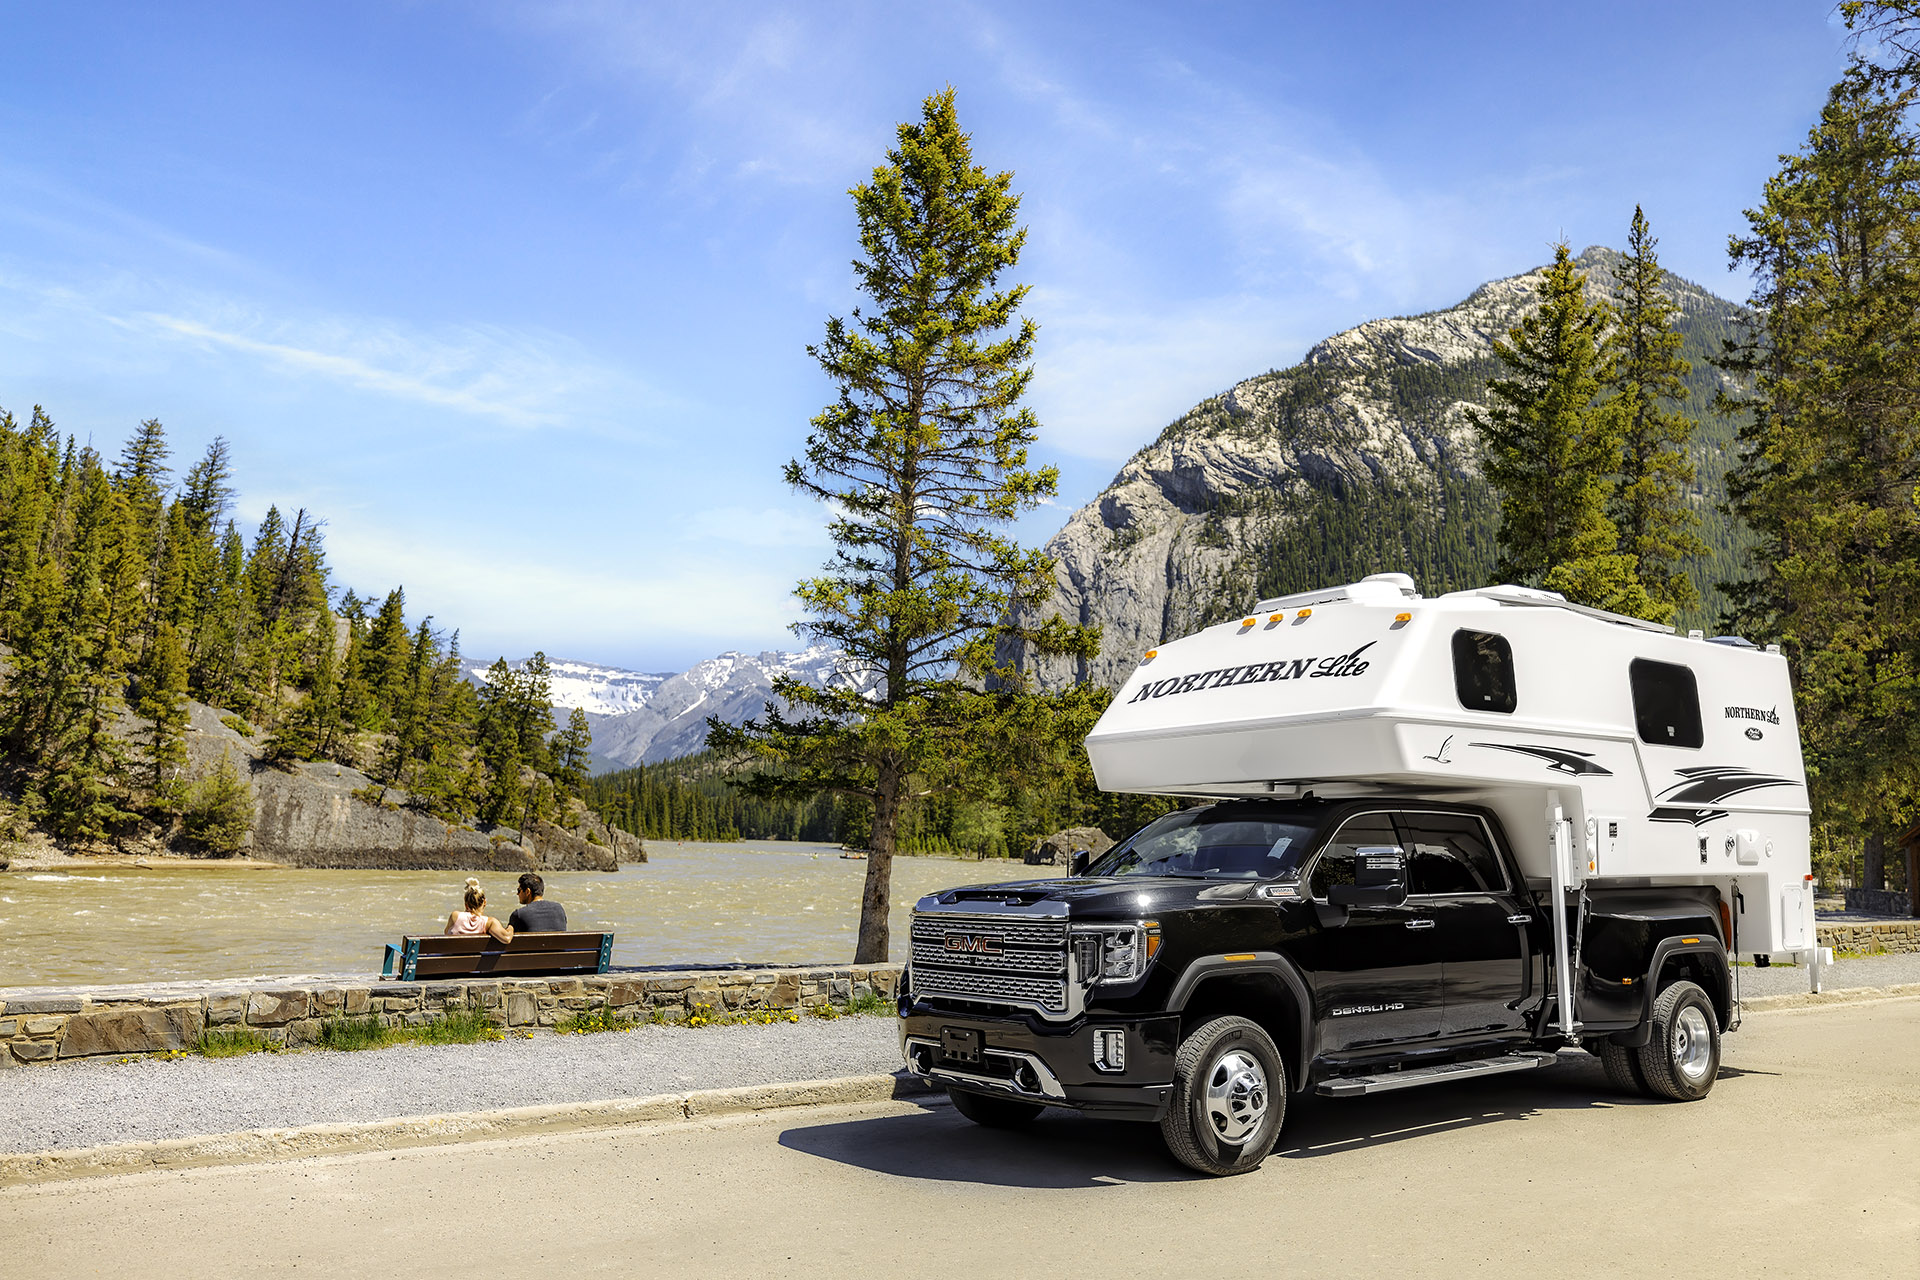 Family Road Trip | Northern Lite 4-Season Truck Campers